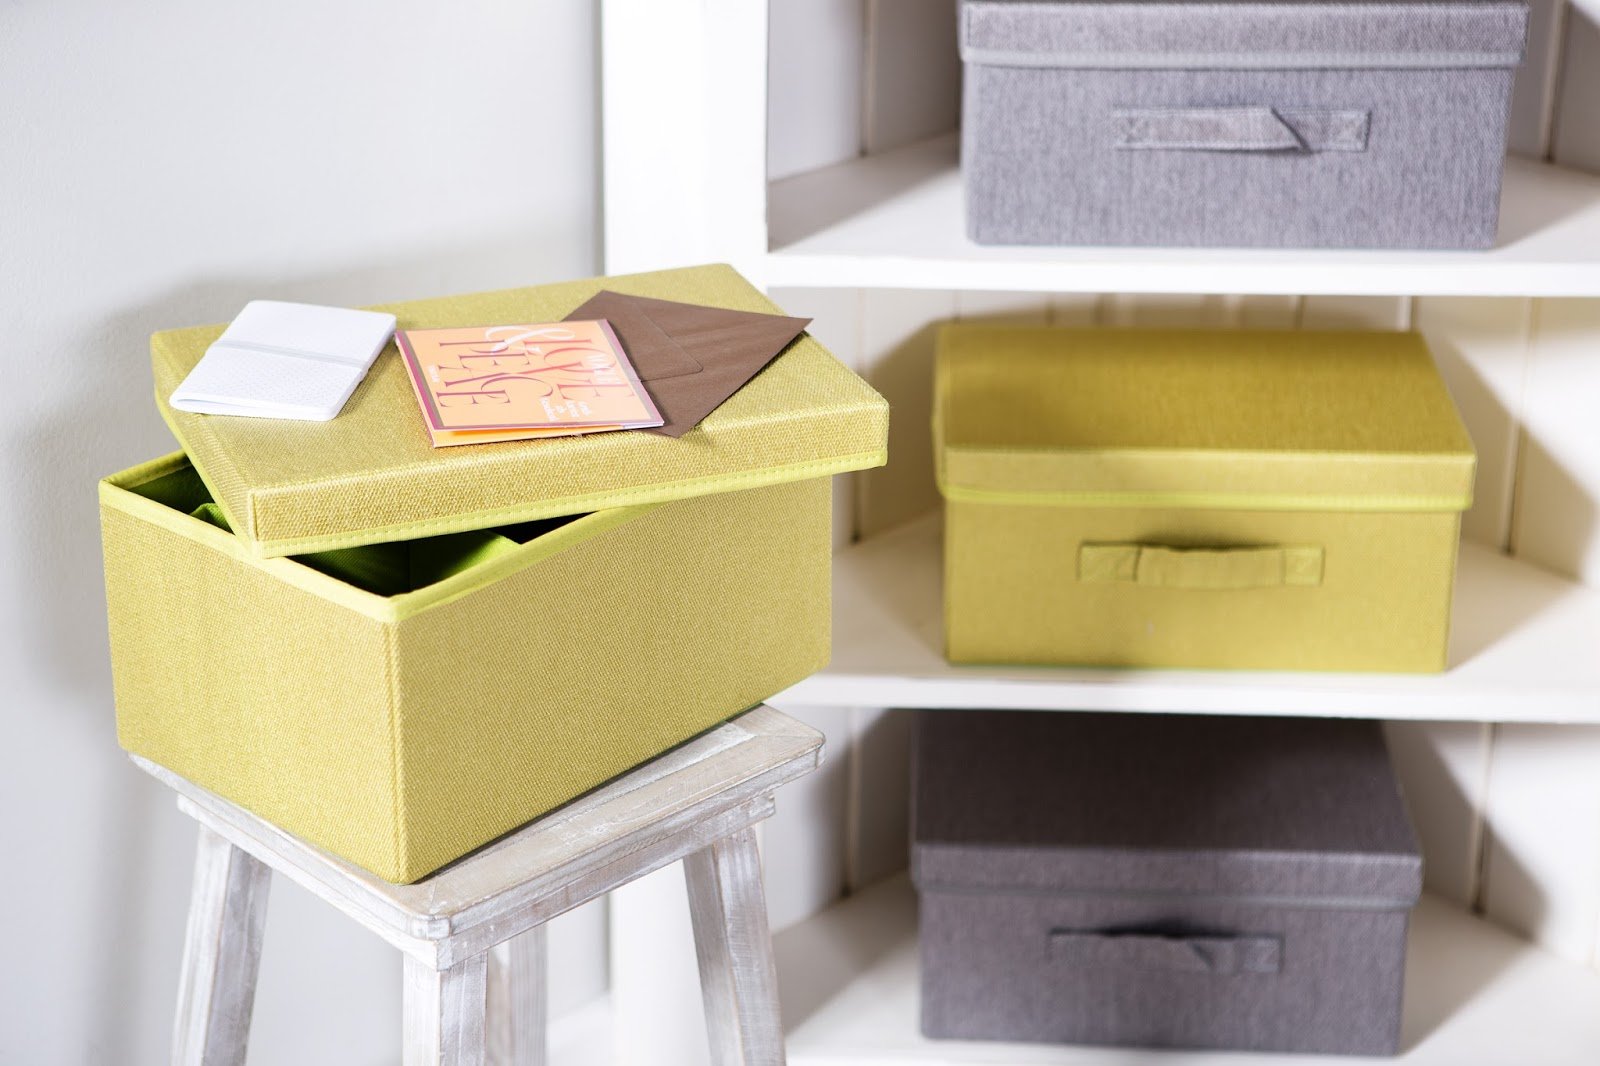 Сделать коробку для вещей. Декор коробки для хранения. Картонные коробки красивые для хранения. Коробки для хранения из картона. Декорирование коробок для хранения.